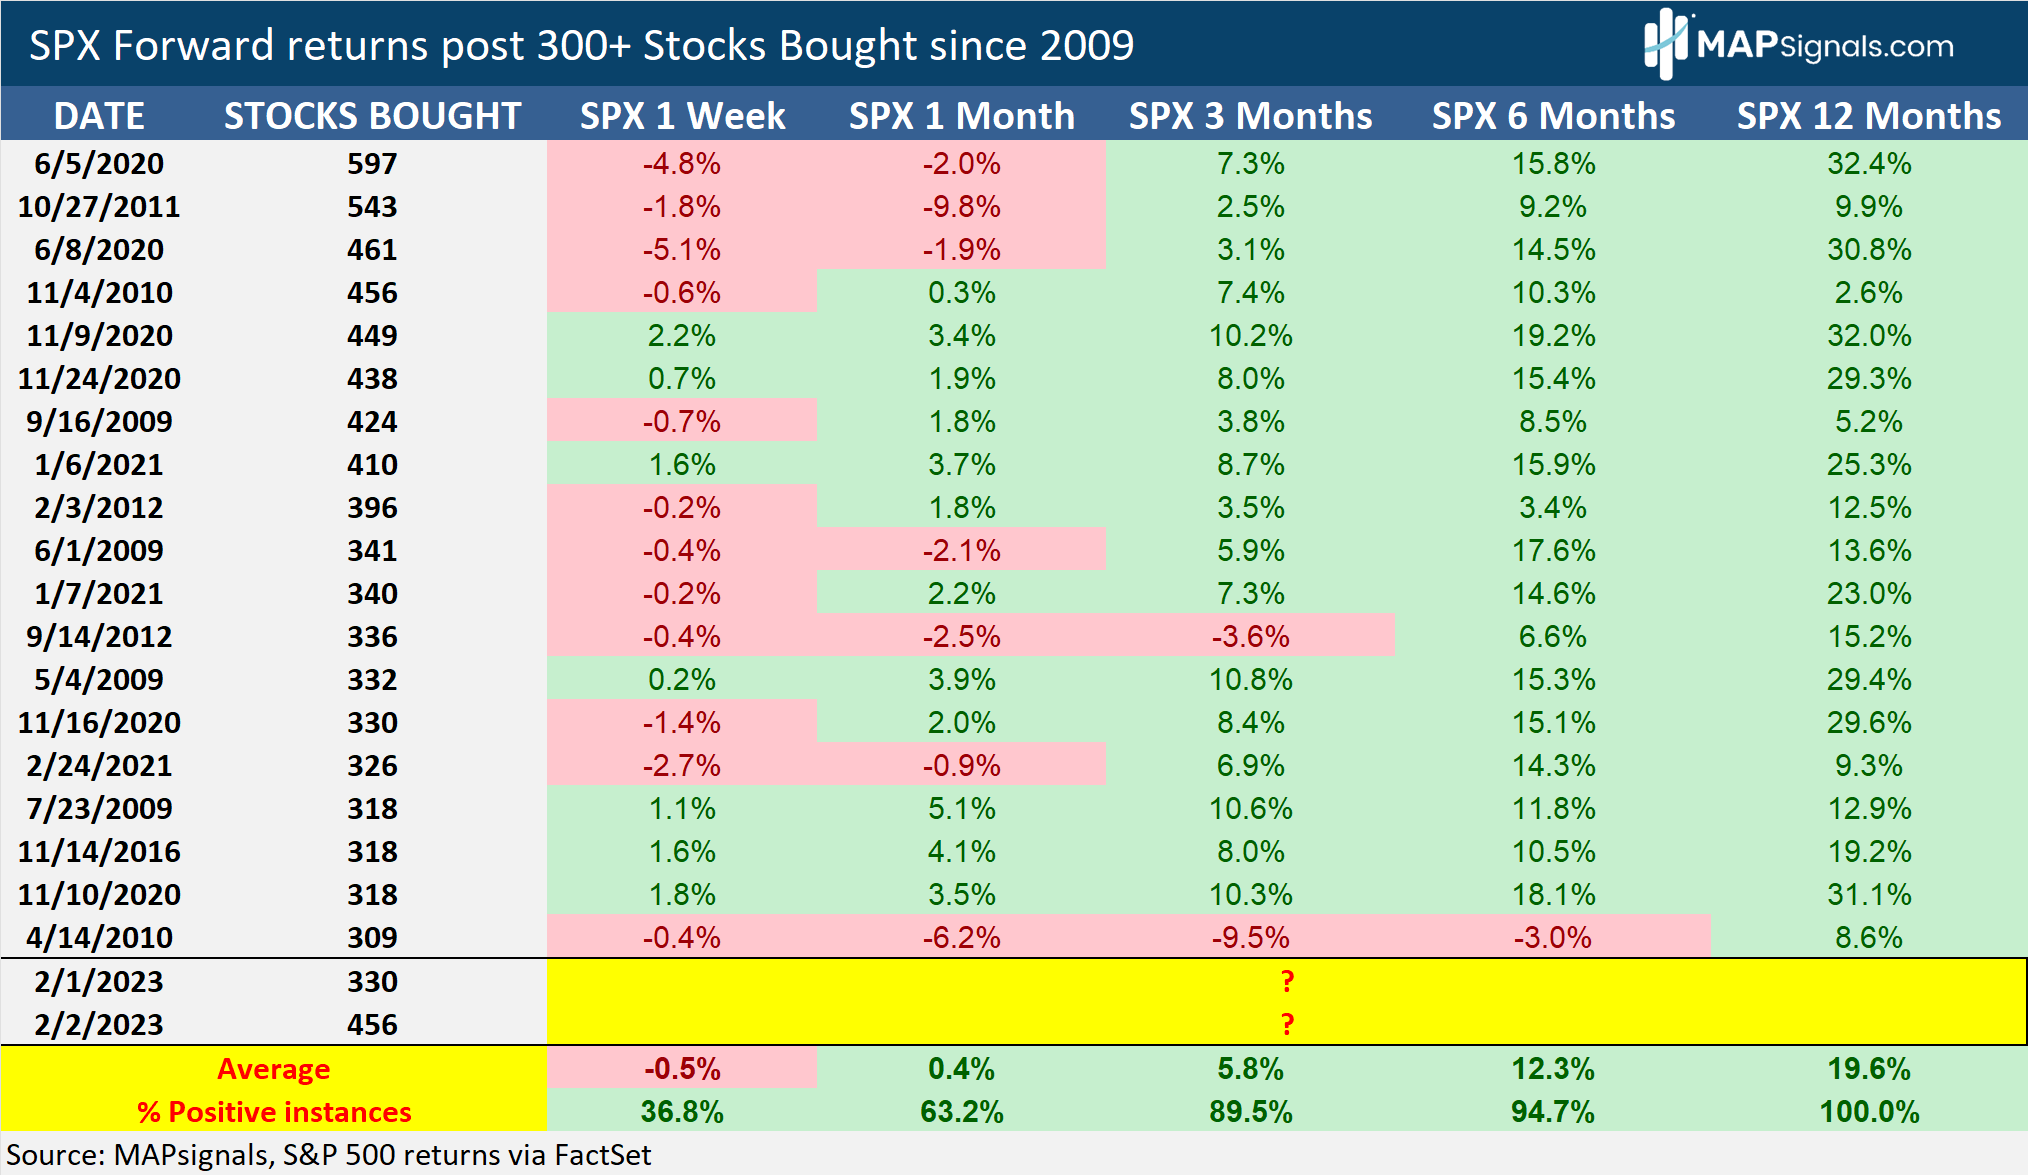 SPX-Forward-returns-post-300-Stocks-Bought-since-2009 | MAPsignals